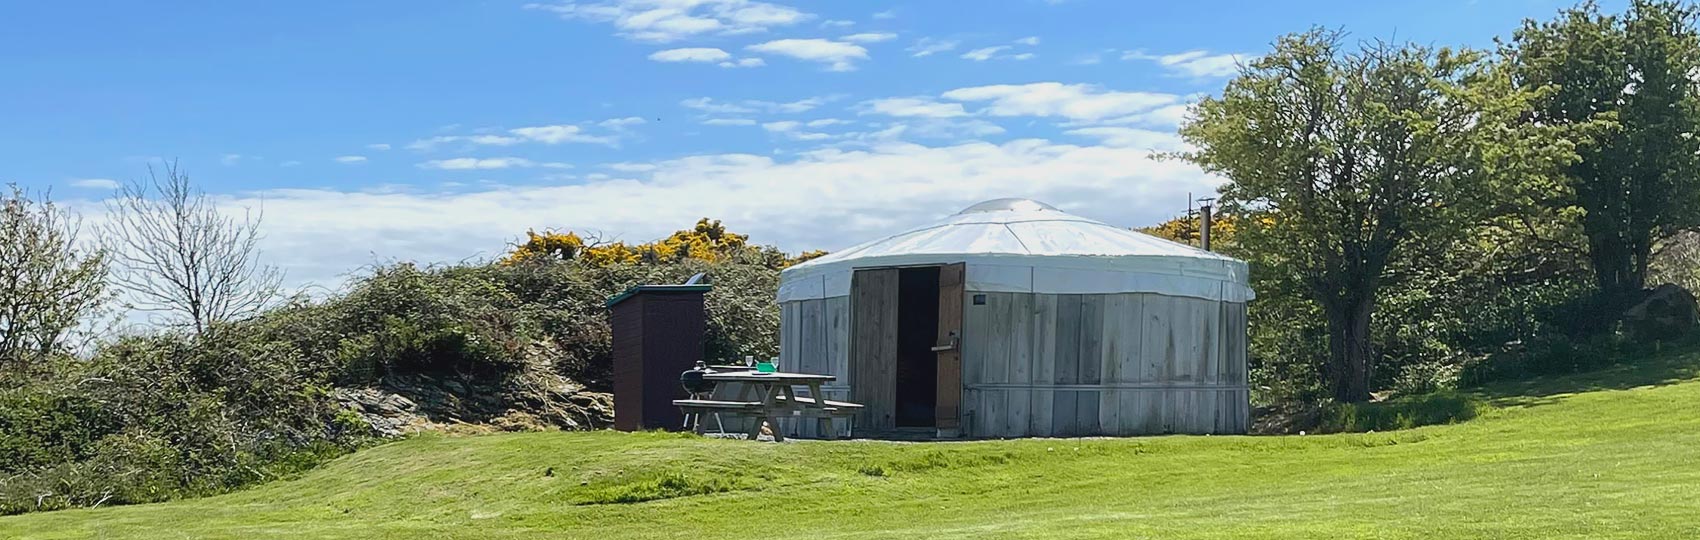 Caban camping yurt Llyn